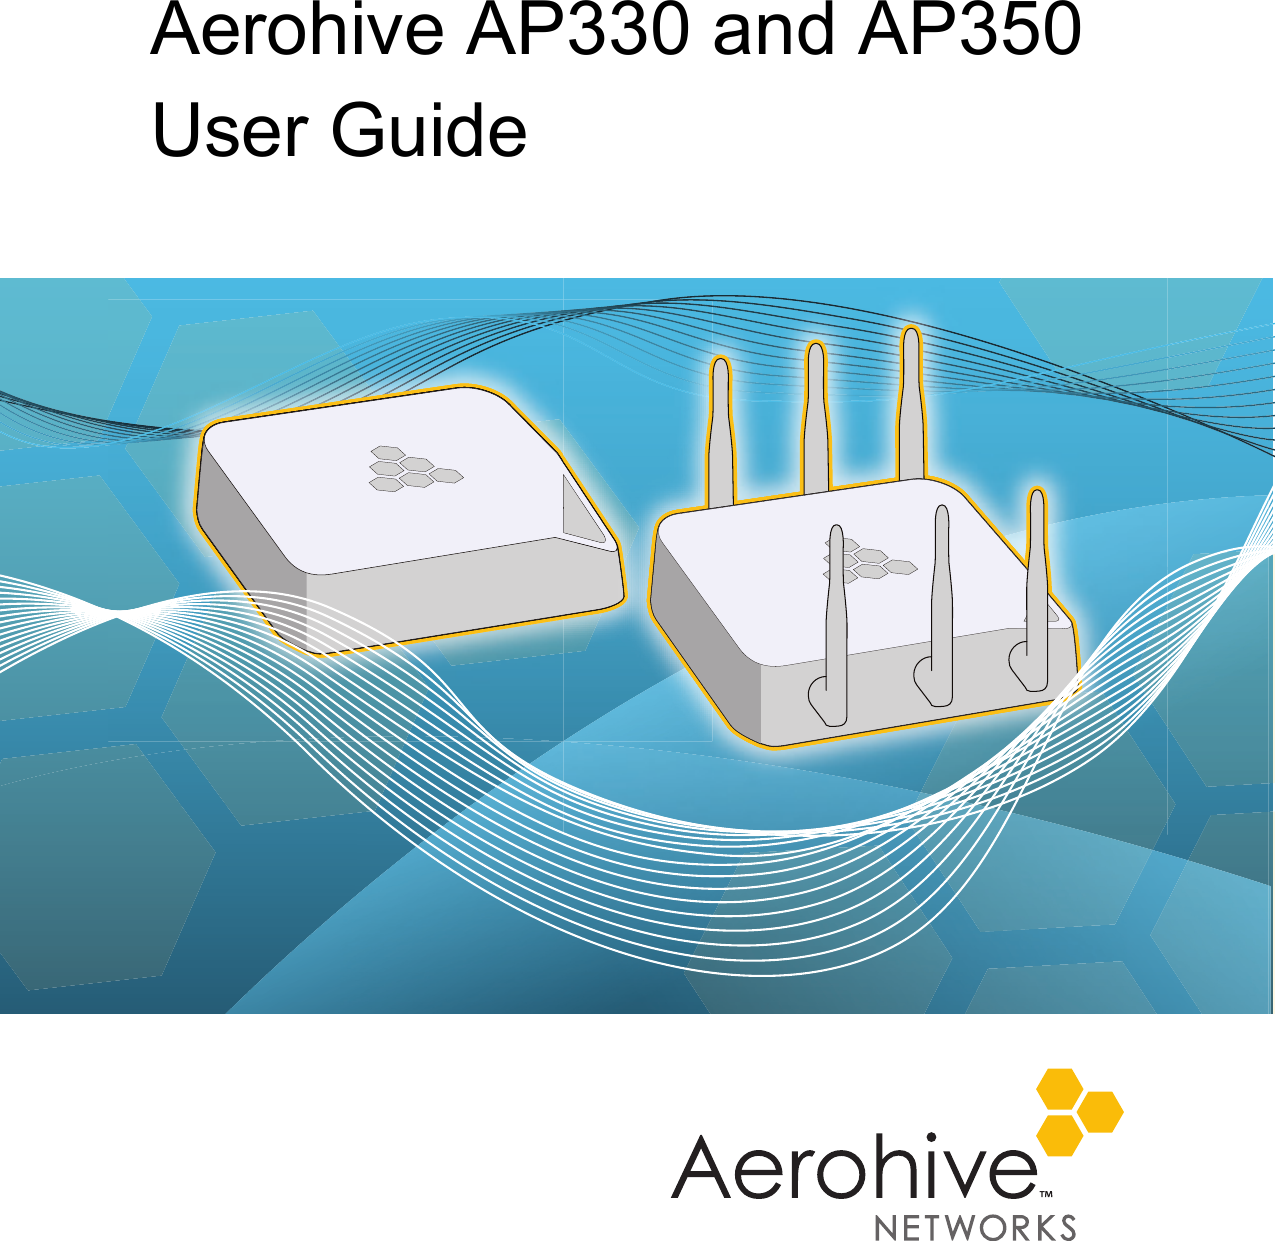 Aerohive AP330 and AP350 User Guide